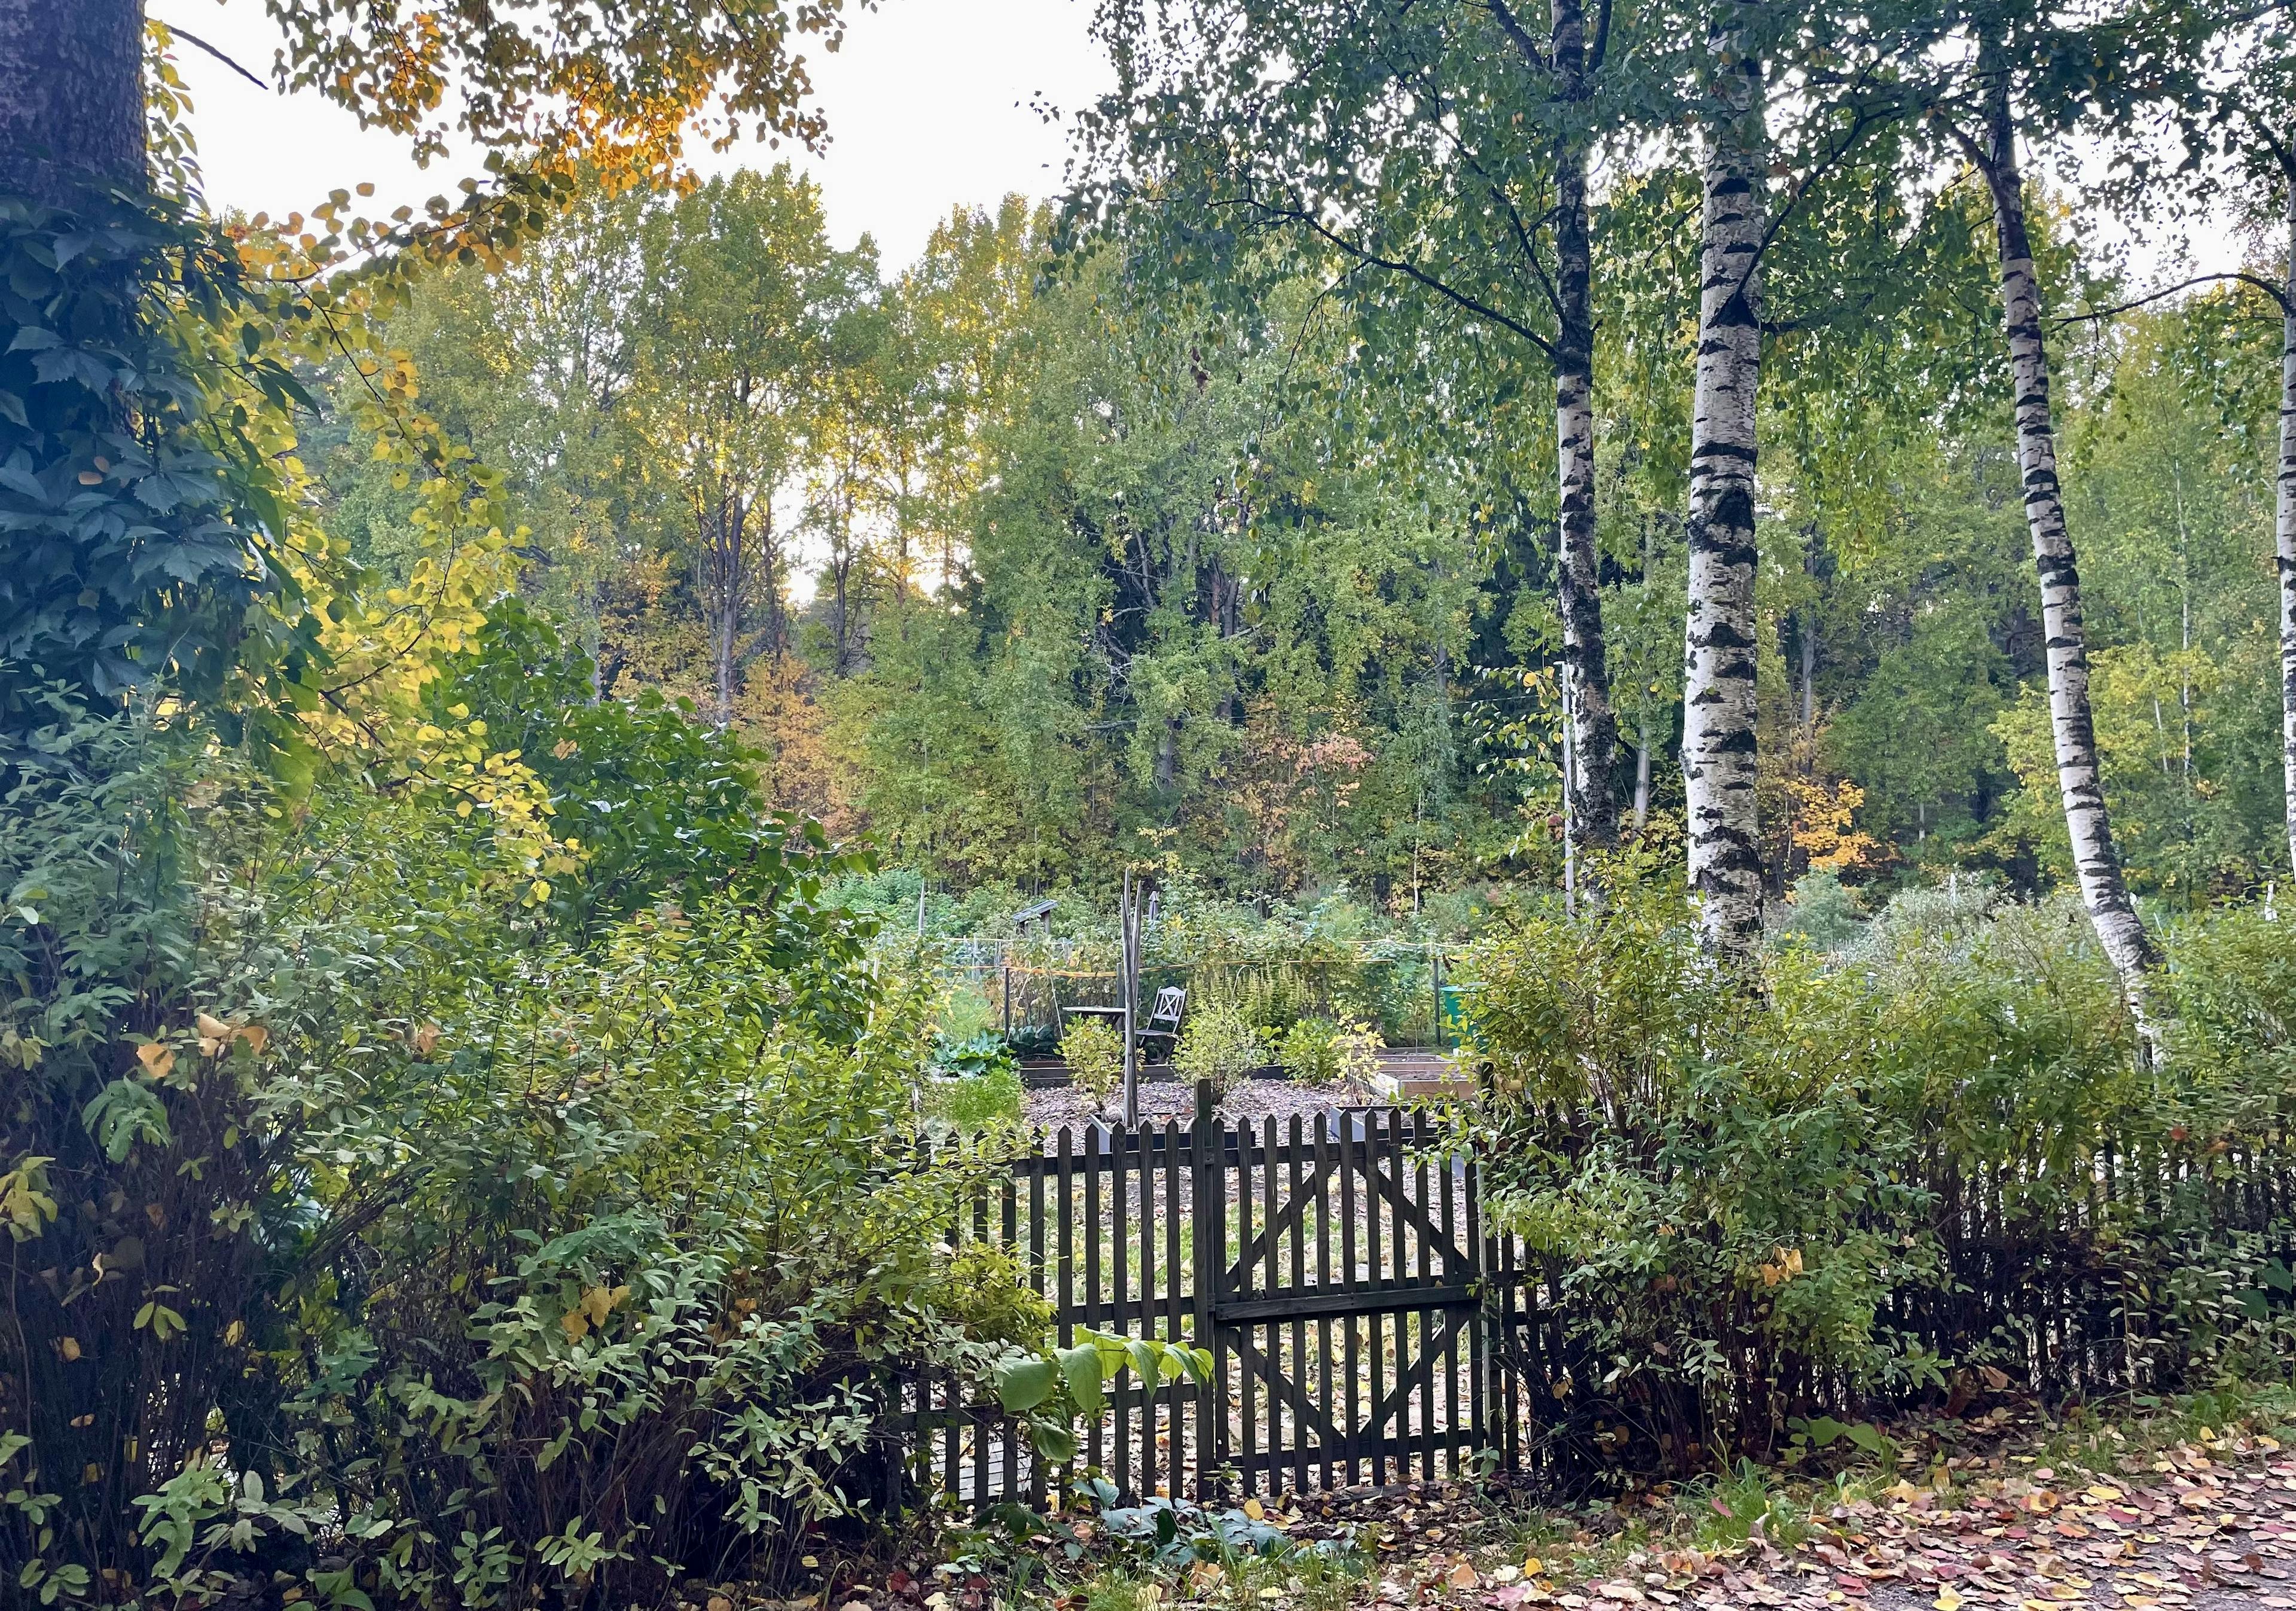 A view from the Keskuspuisto park in Helsinki